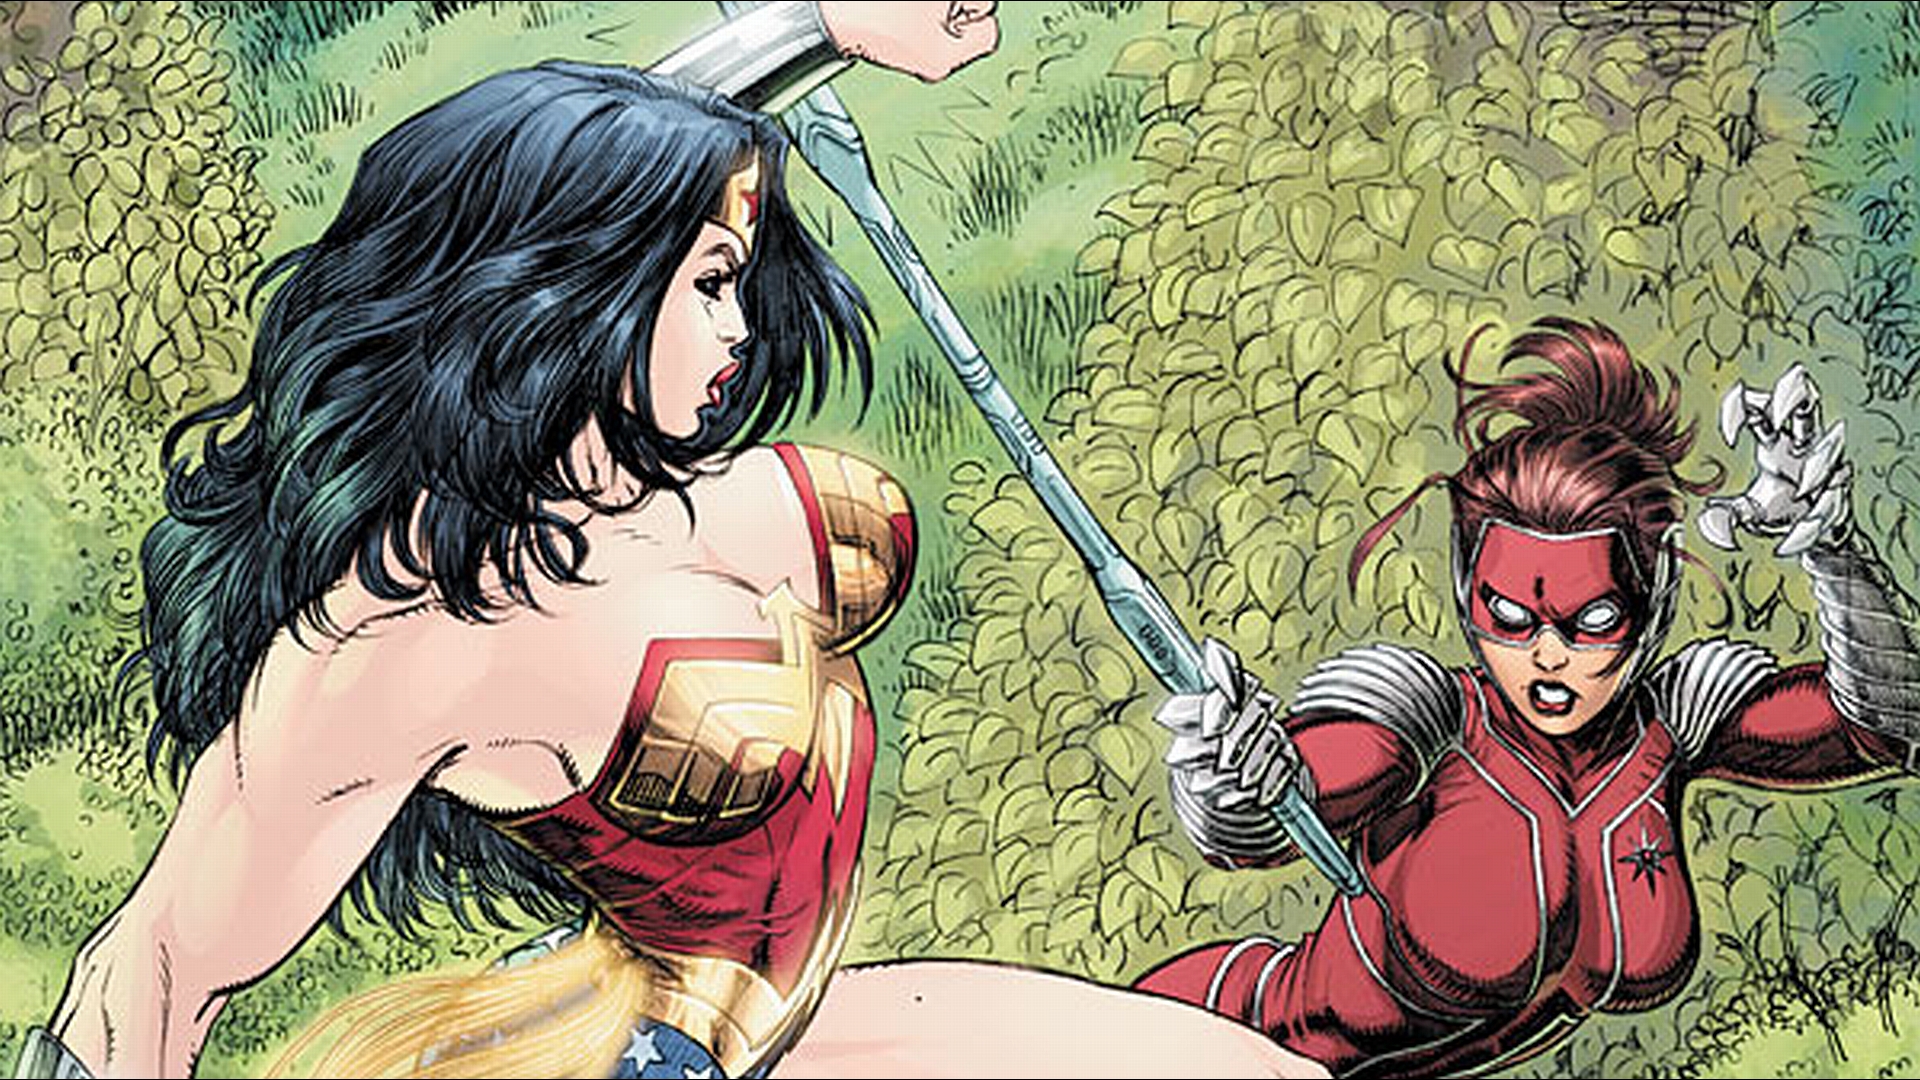 Comic book character Wonder Woman featured in a desktop wallpaper.